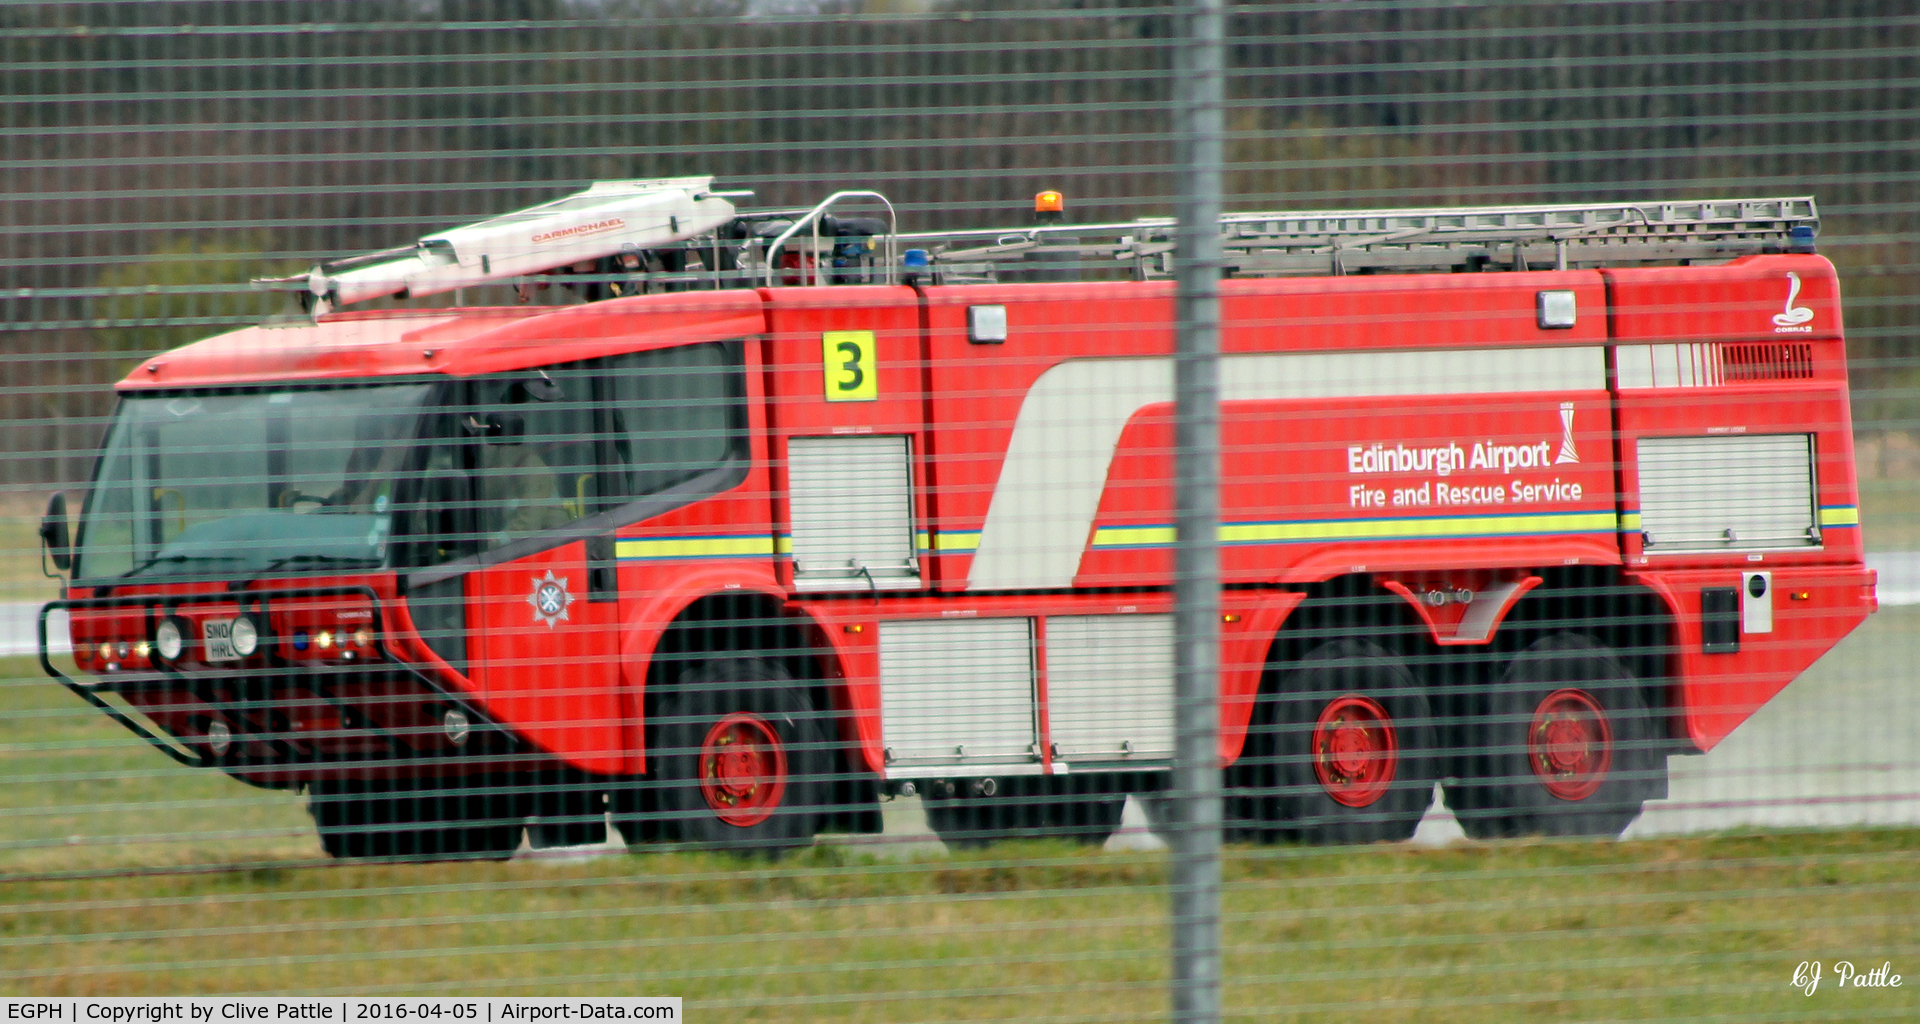 Edinburgh Airport, Edinburgh, Scotland United Kingdom (EGPH) - Emergency Fire tender at Edinburgh EGPH